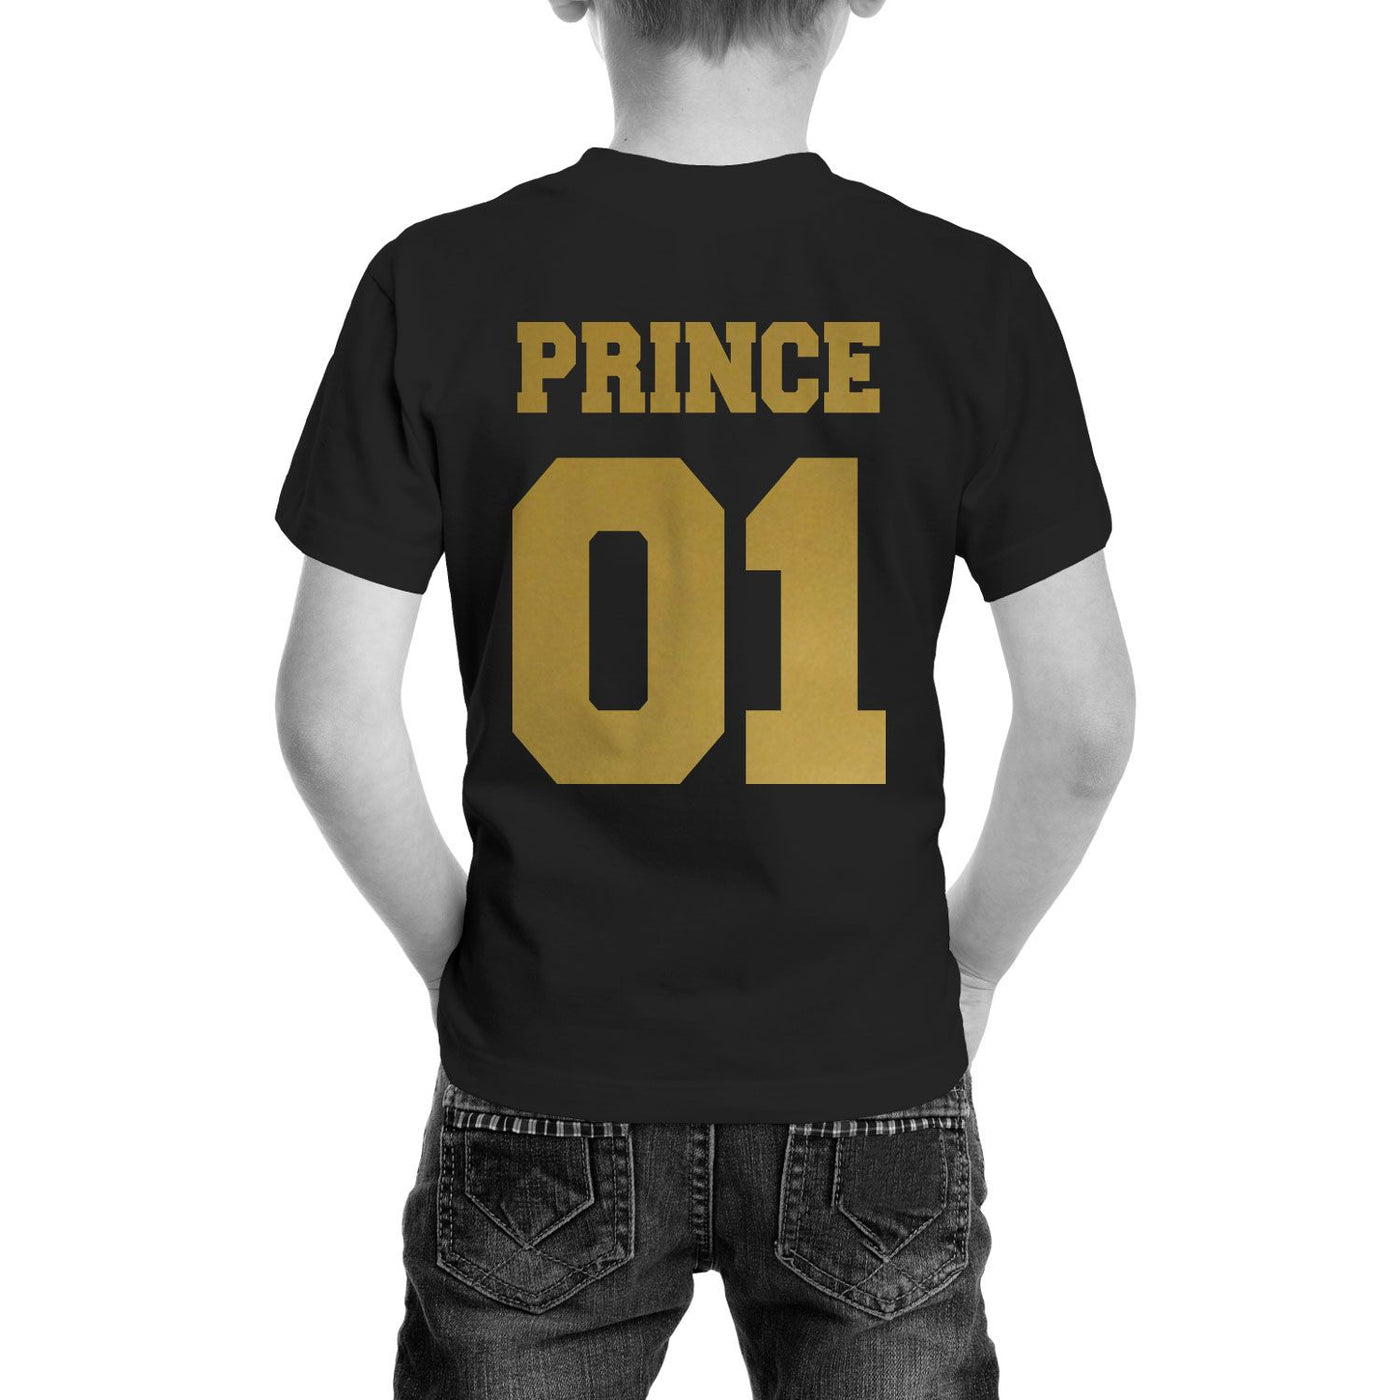 prince-01-gold5978ab5735c46